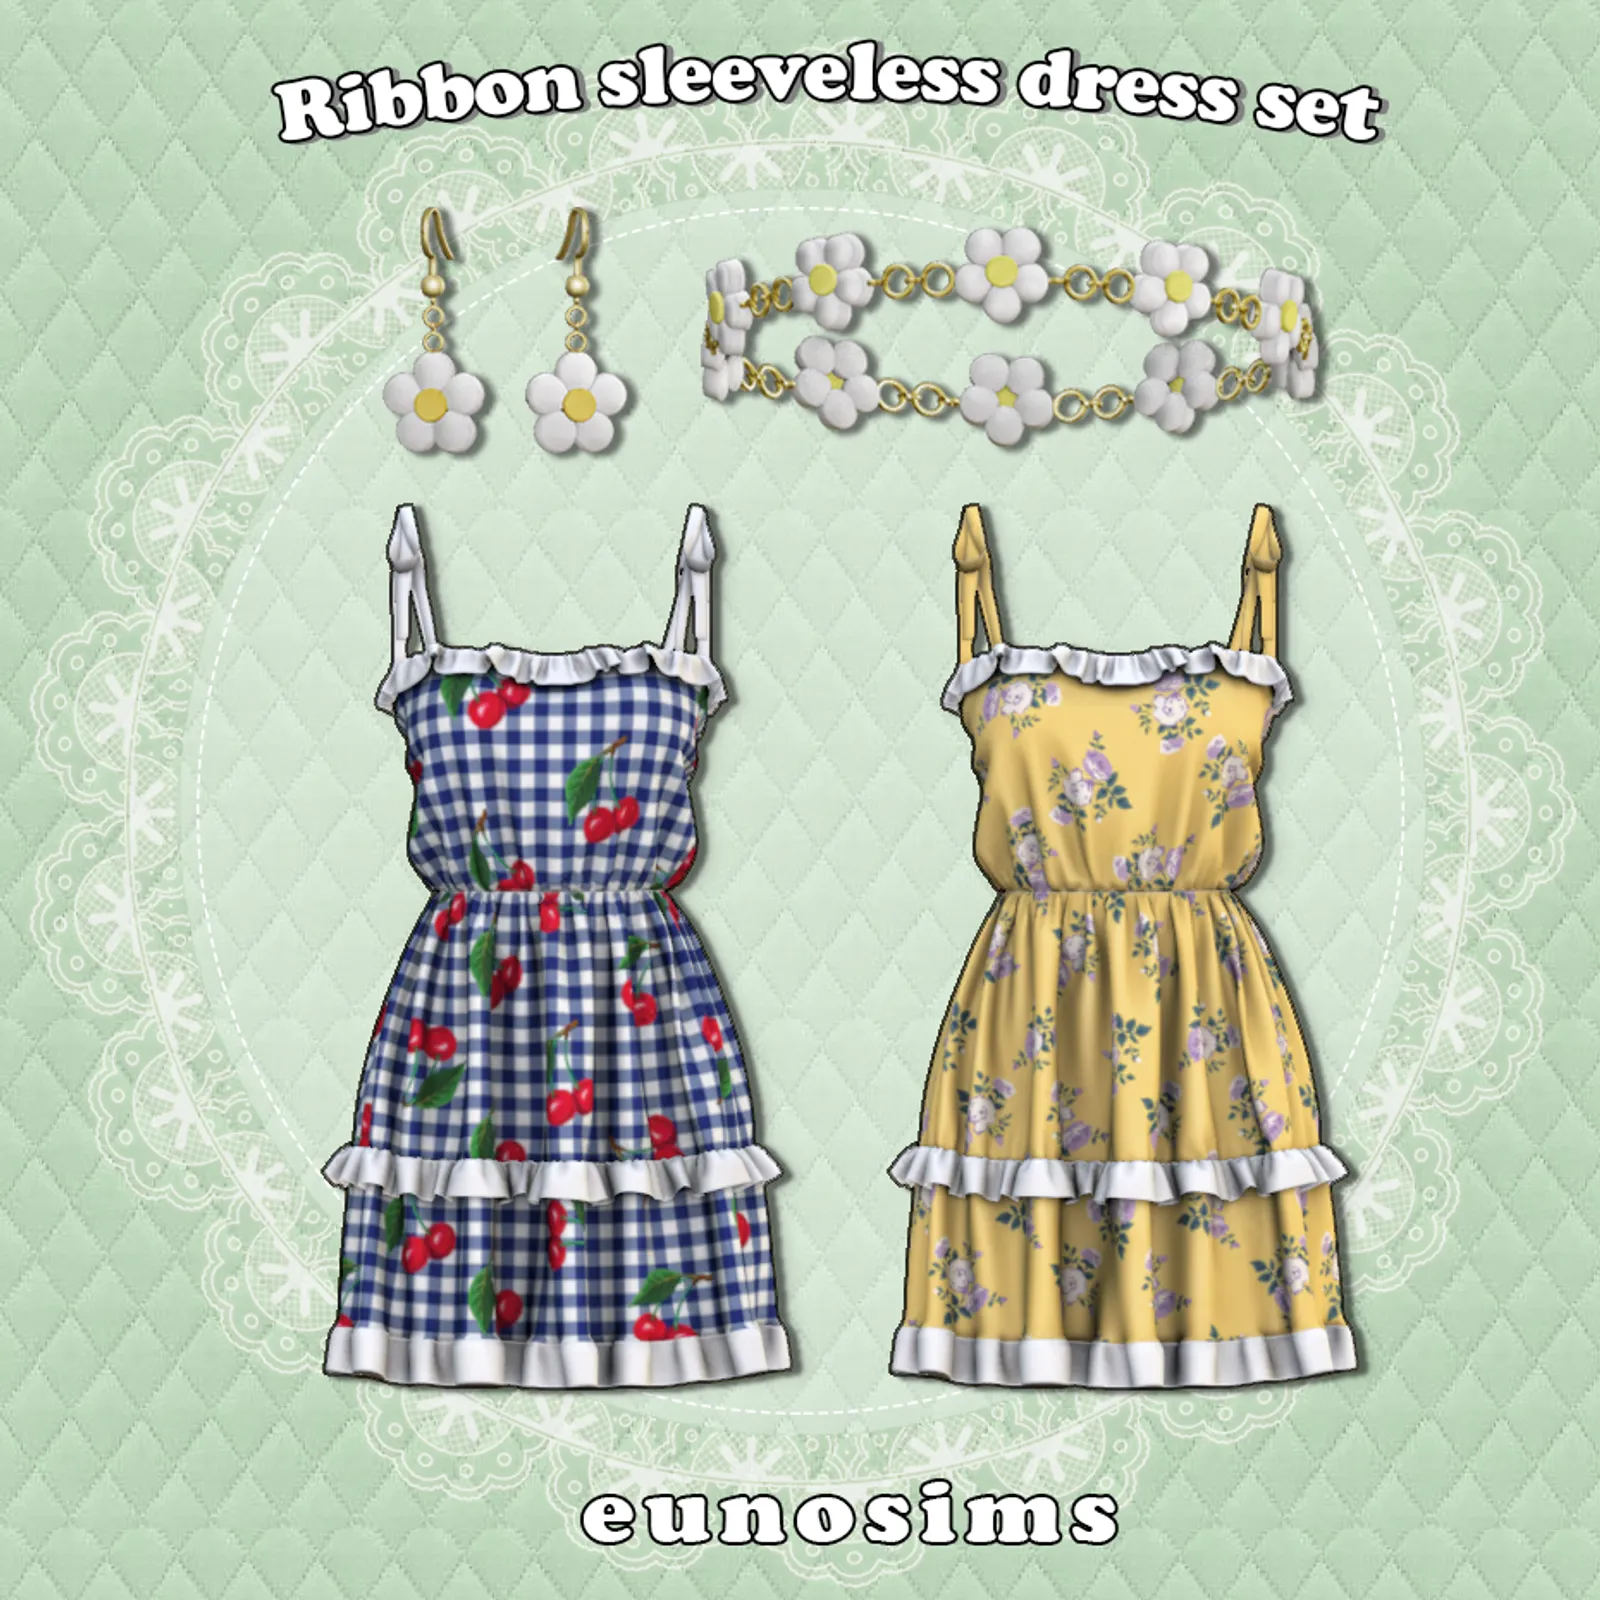 Ribbon sleeveless dress set